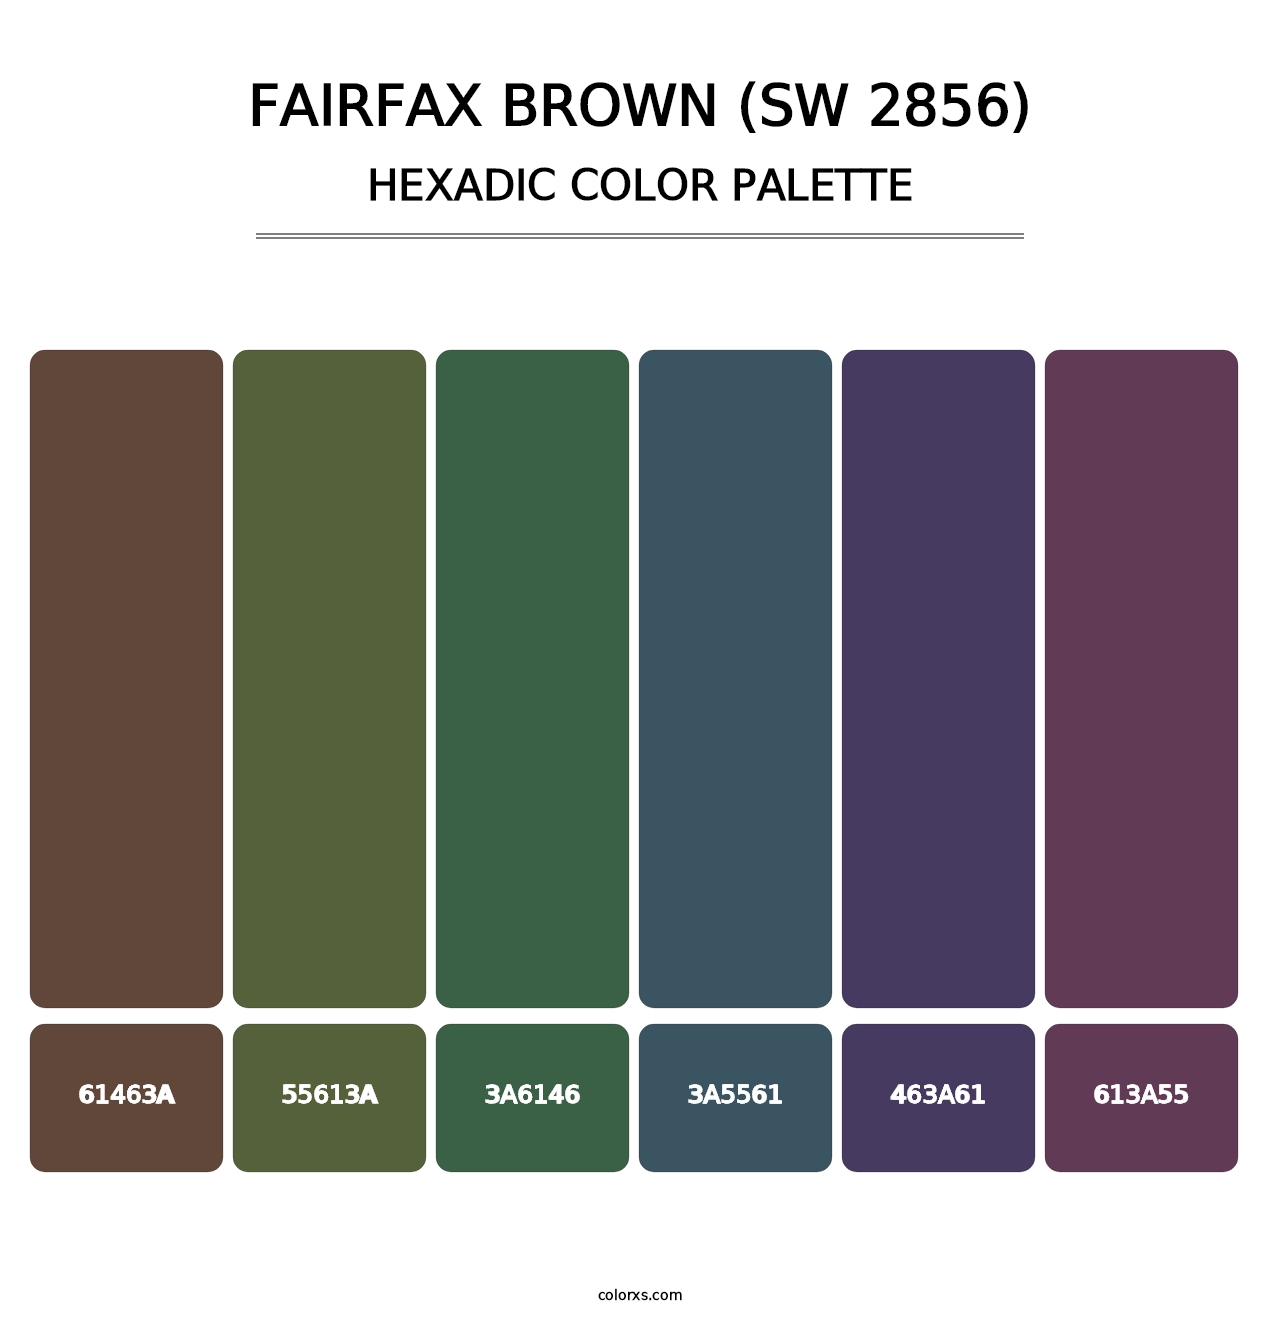 Fairfax Brown (SW 2856) - Hexadic Color Palette